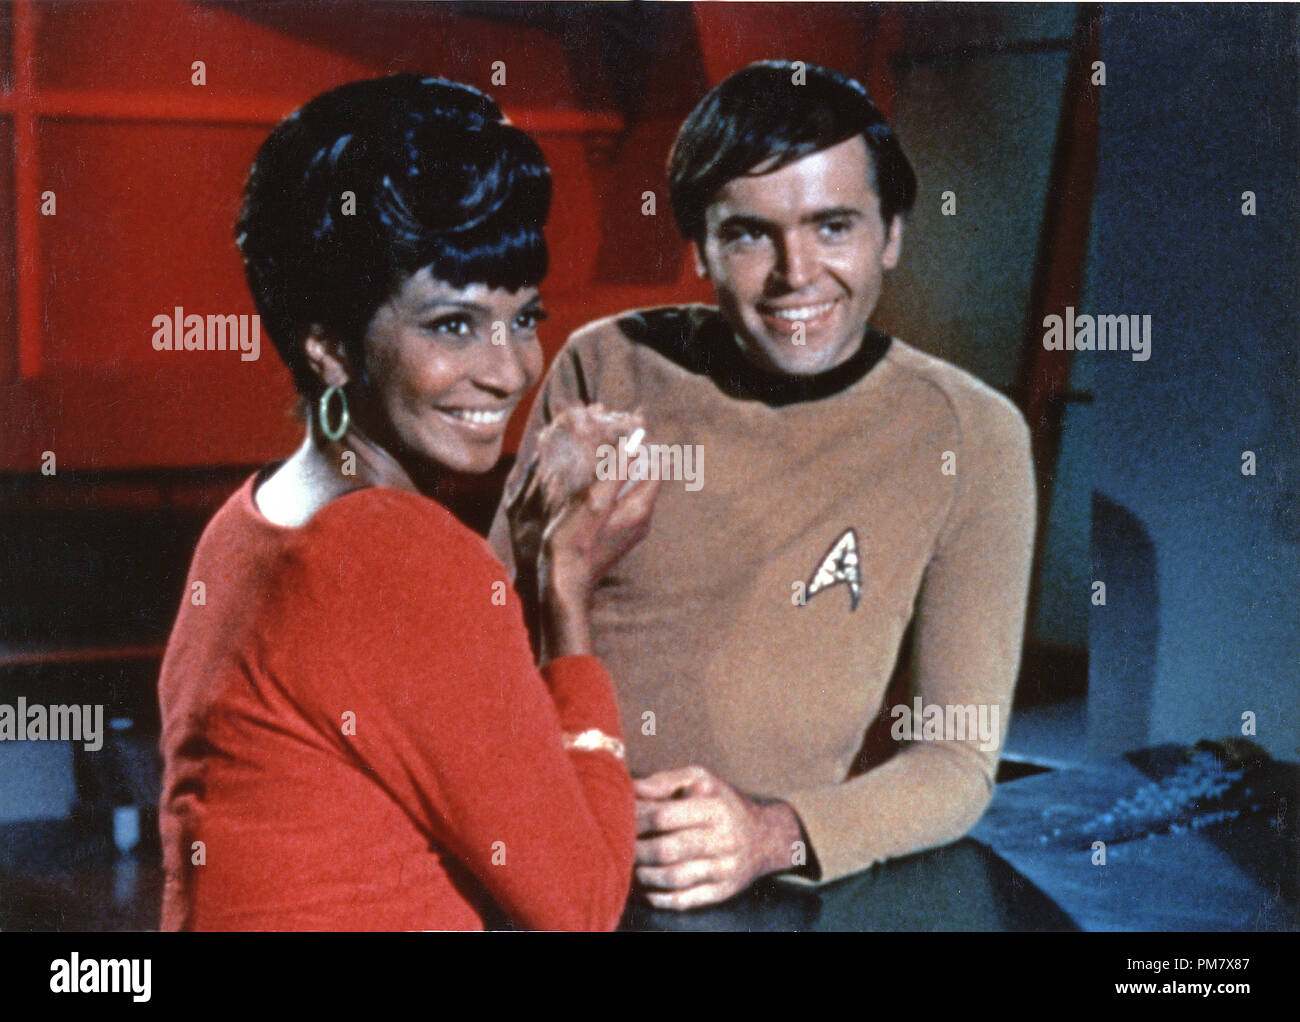 Studio Publicity Still from 'Star Trek' Nichelle Nichols, Walter Koening circa 1967 Paramount File Reference # 31537 615THA Stock Photo